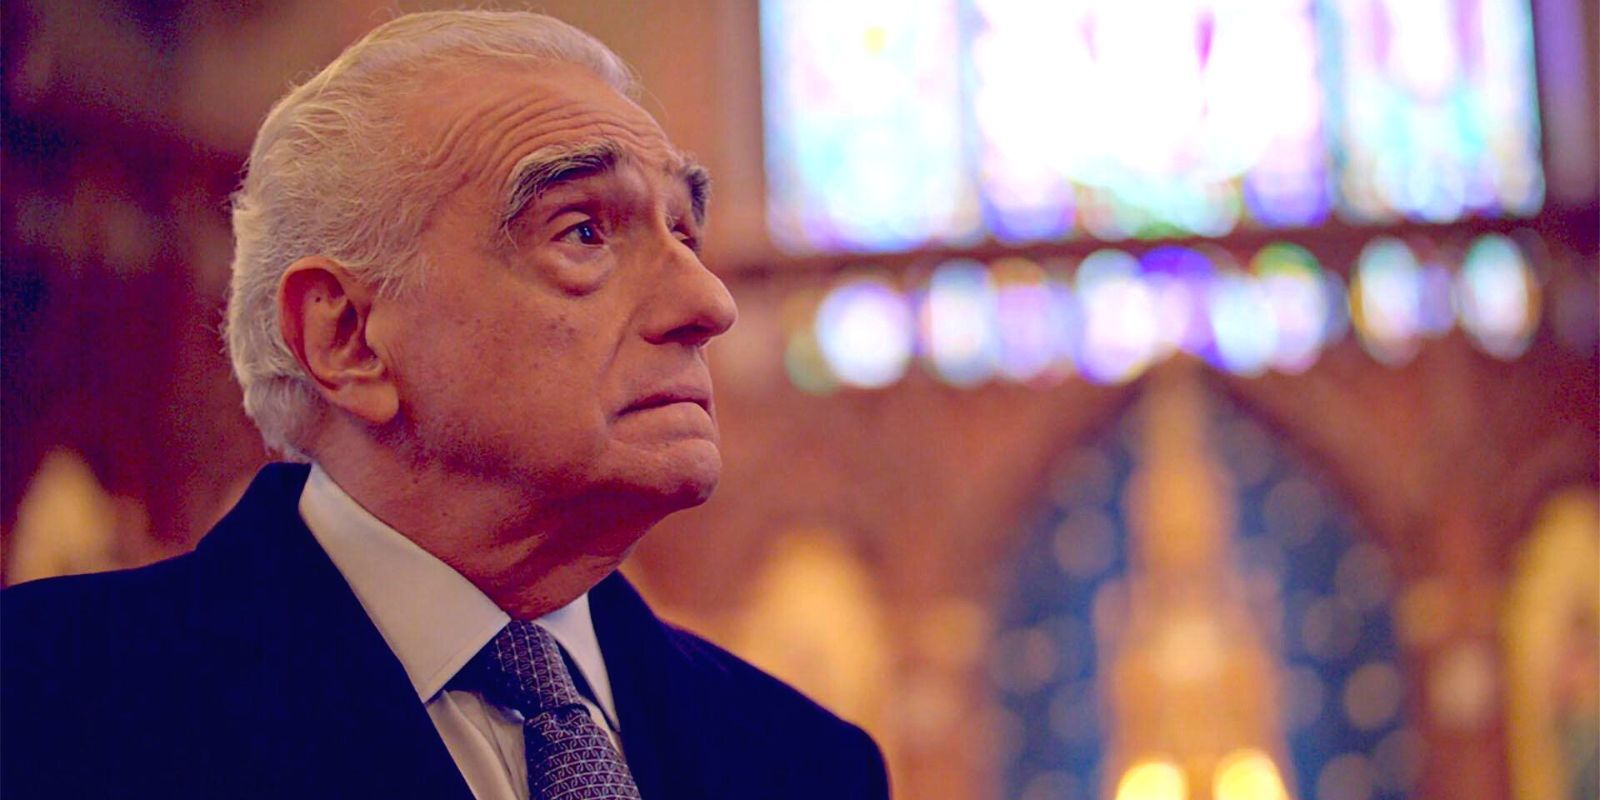 Martin Scorsese luce pensativo en una catedral borrosa vestido con traje y corbata